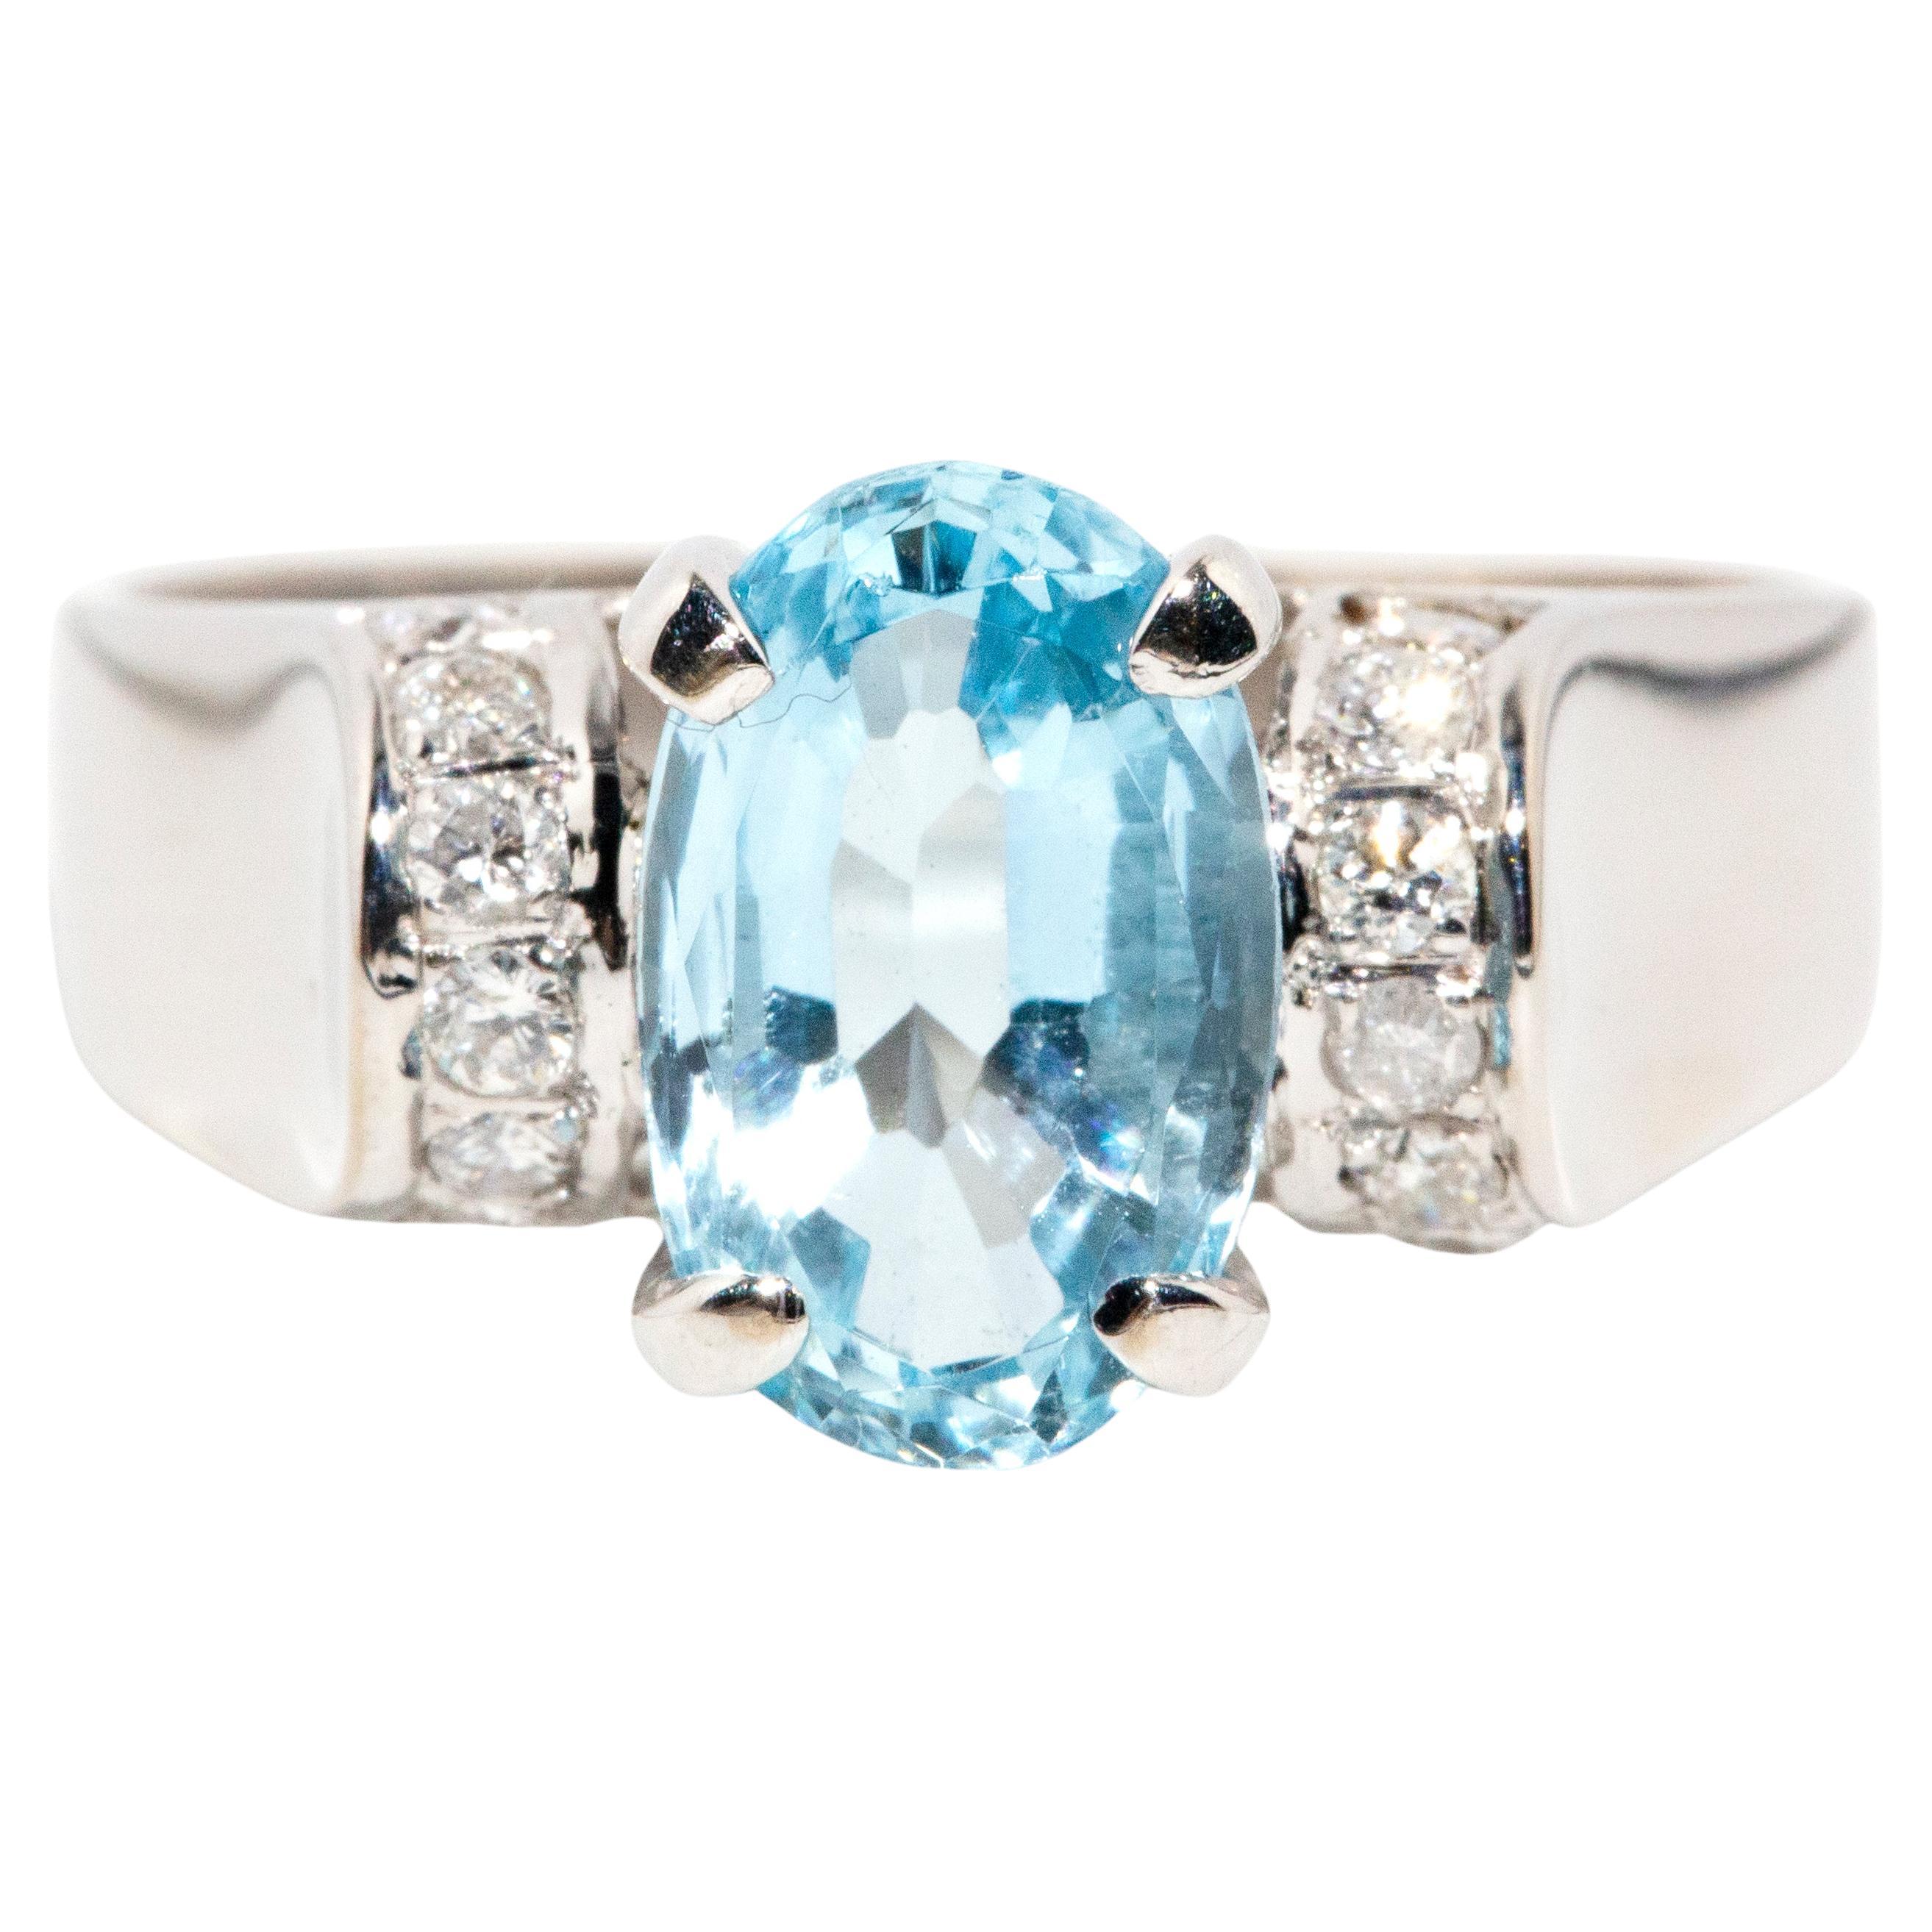 Vintage Circa 1980s Bright Blue Aquamarine & Diamond Ring 14 Carat White Gold